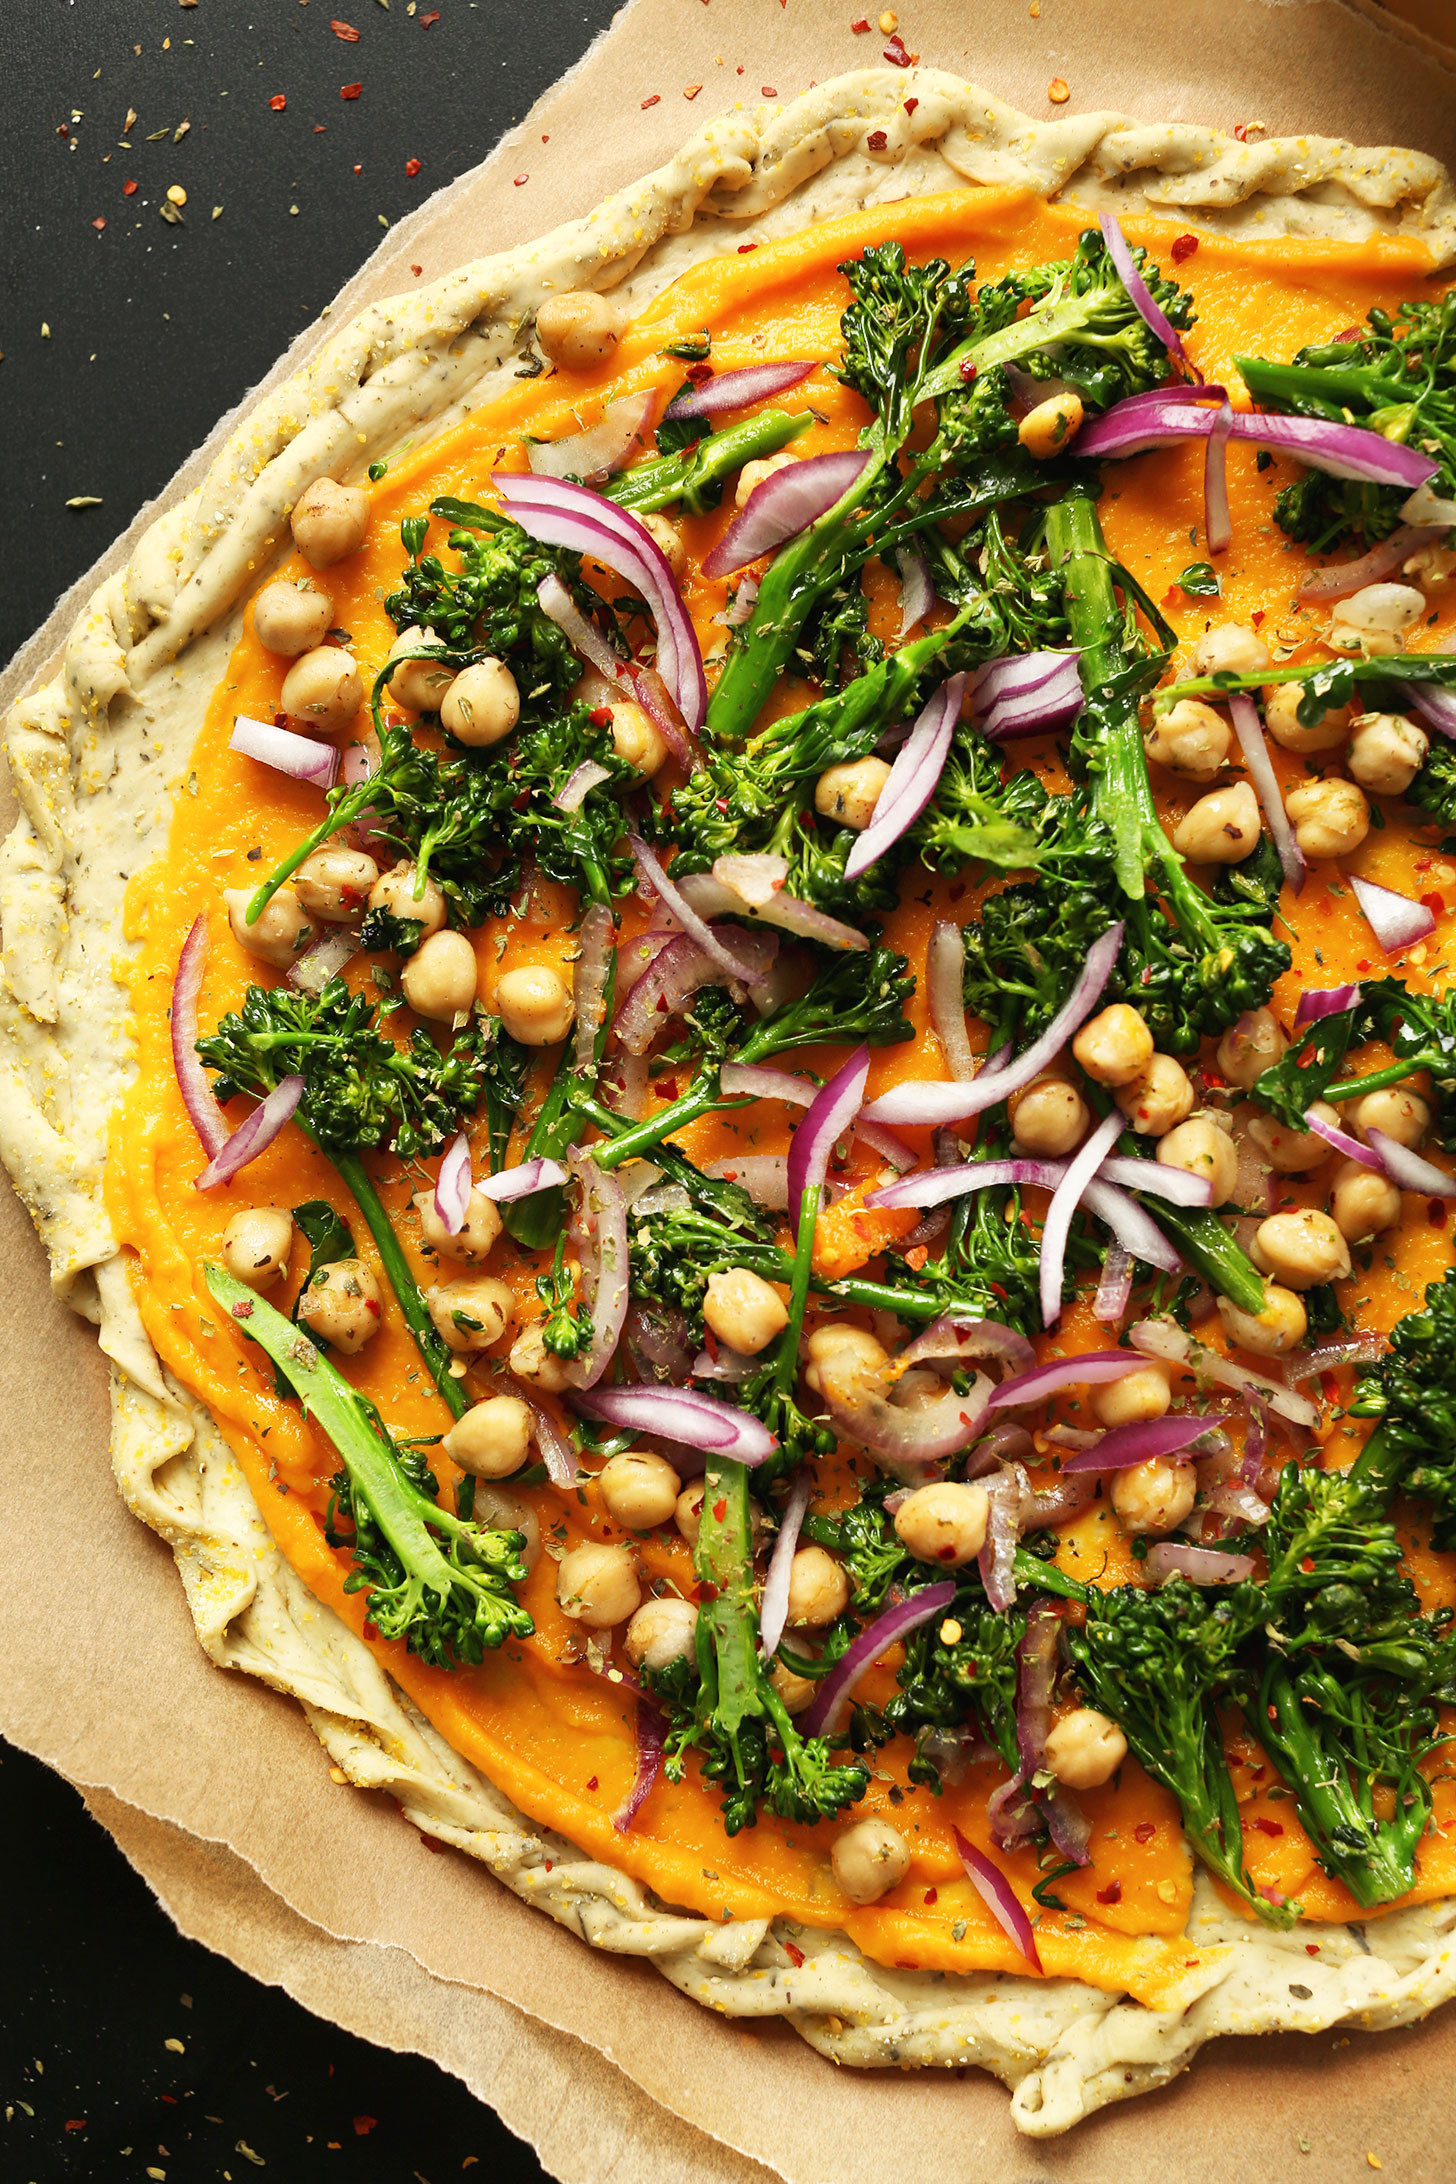 Healthy Vegan Dinner Recipes
 30 delicious vegan dinner recipes for happy tummies